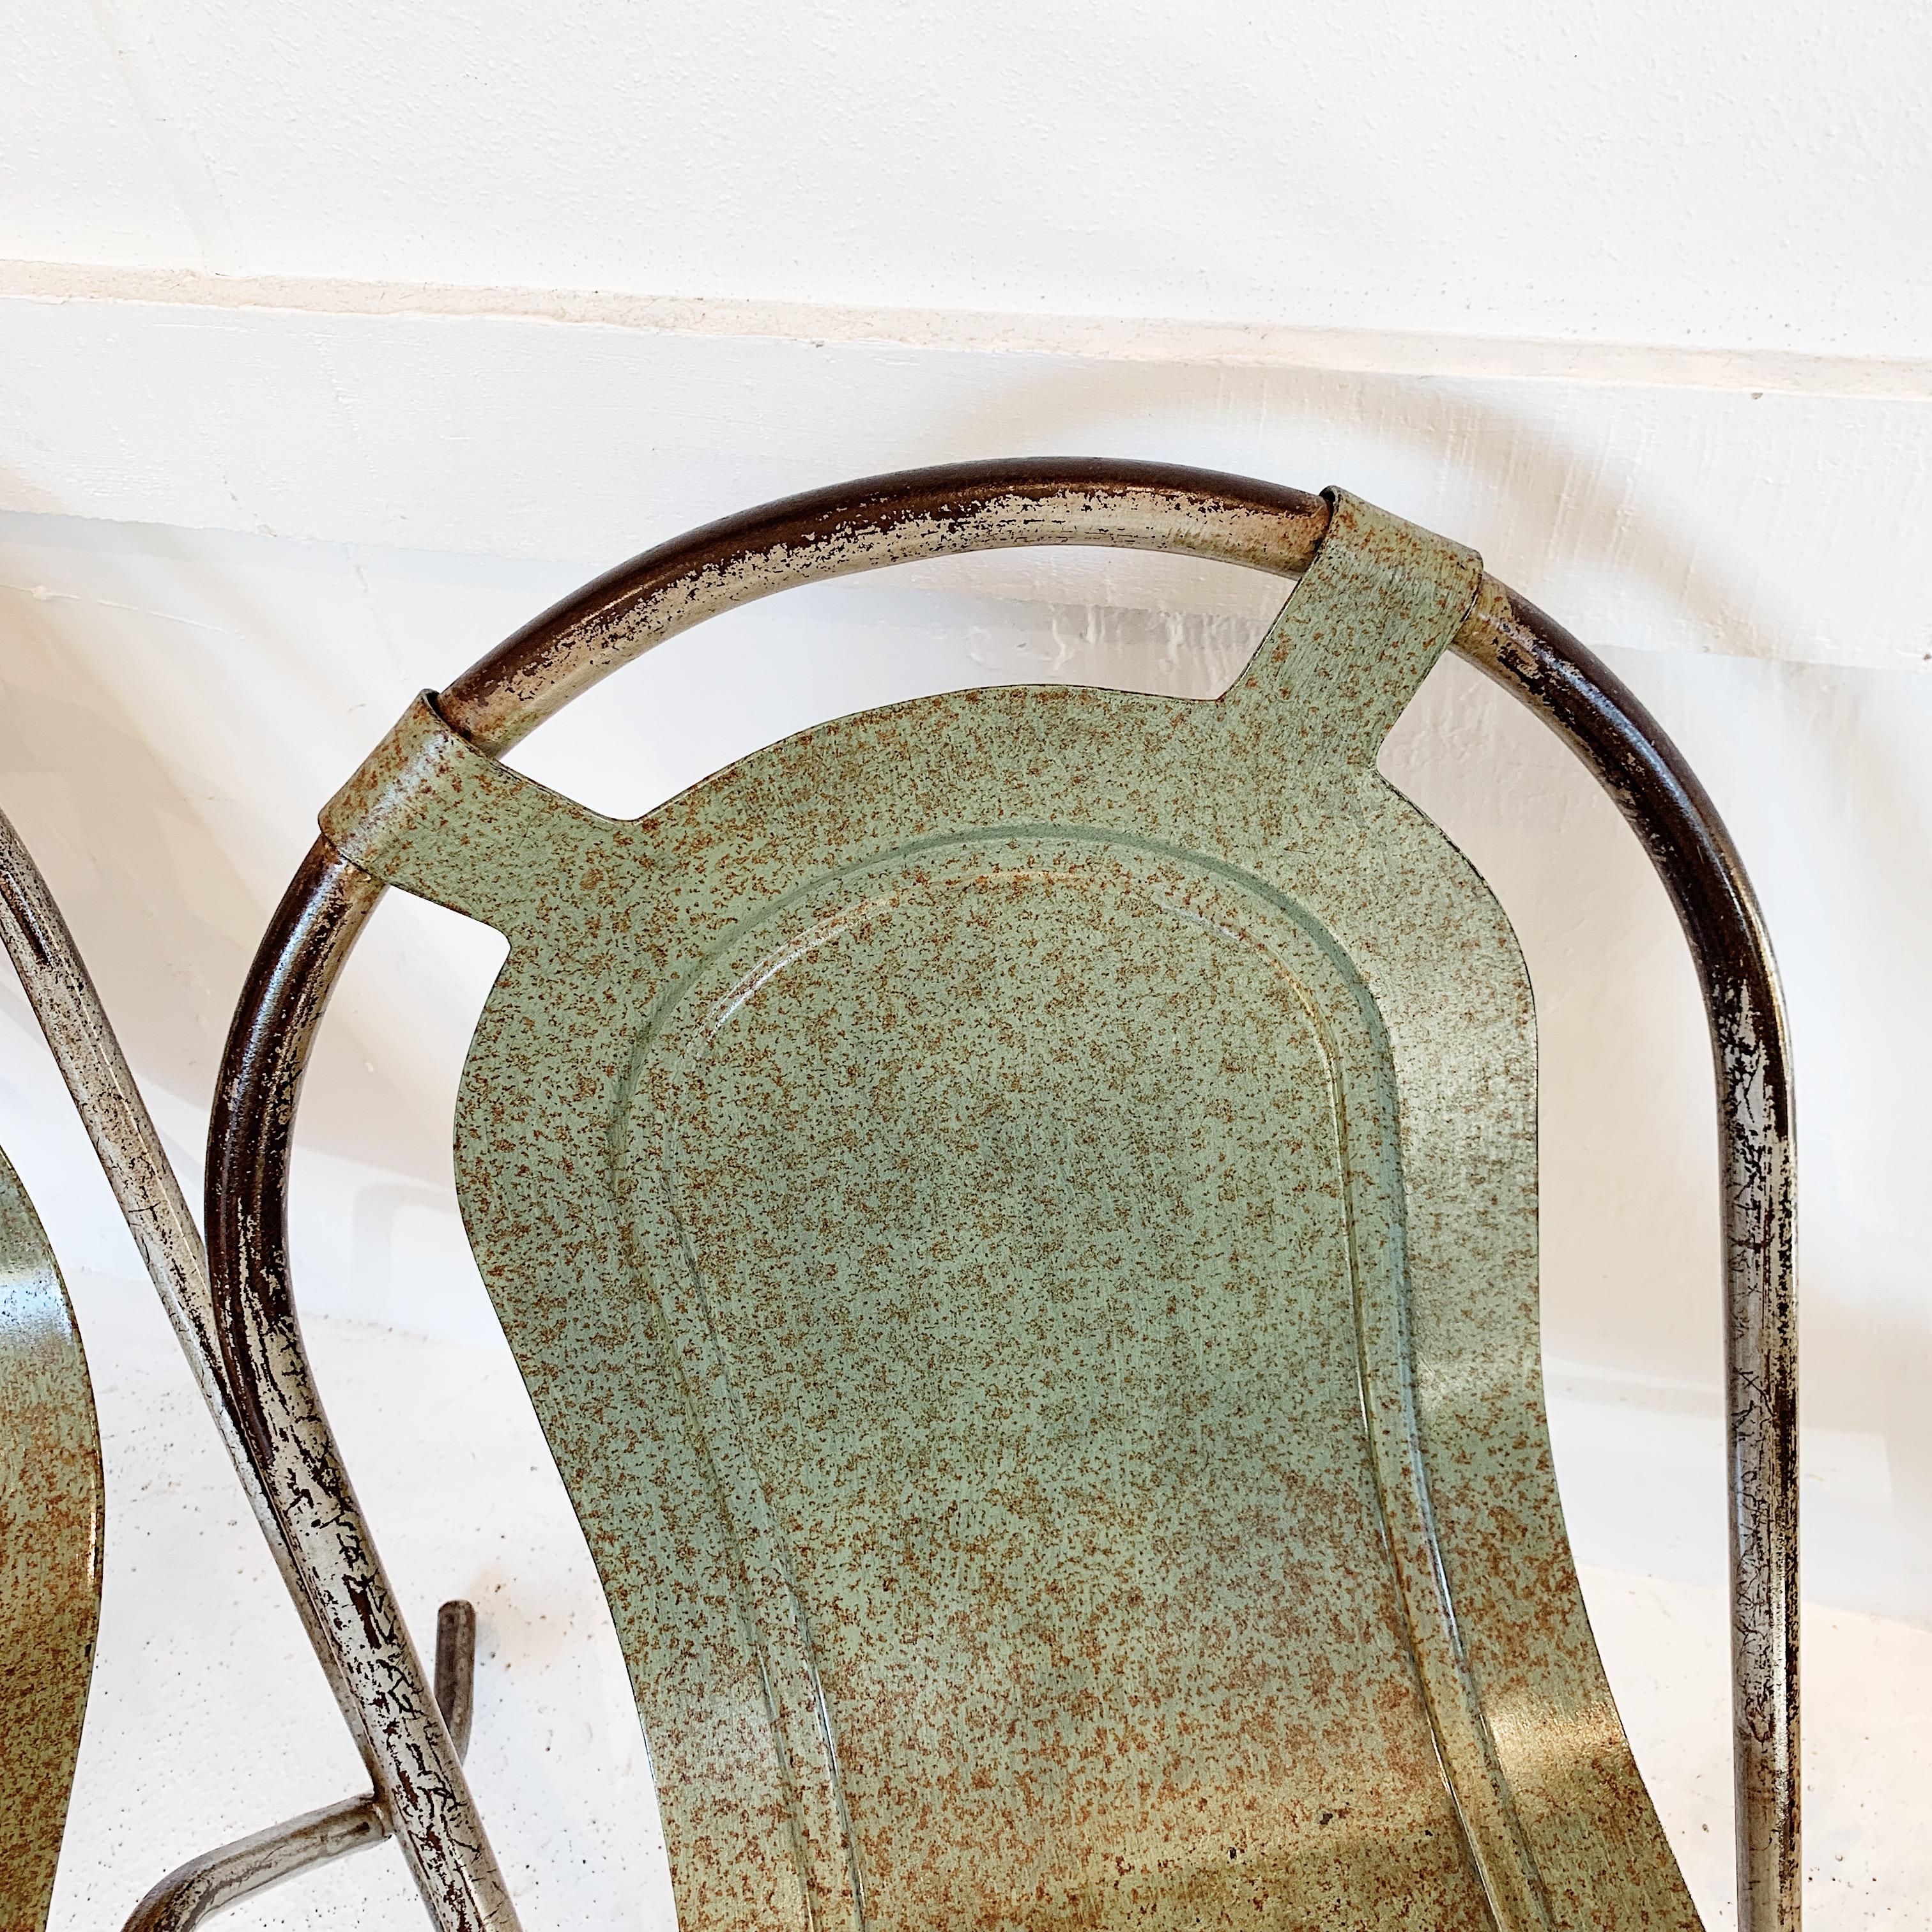 Metalwork Post-War Sebel Stak-a-bye Garden Chairs with Steel Blue Pressed Metal Seats